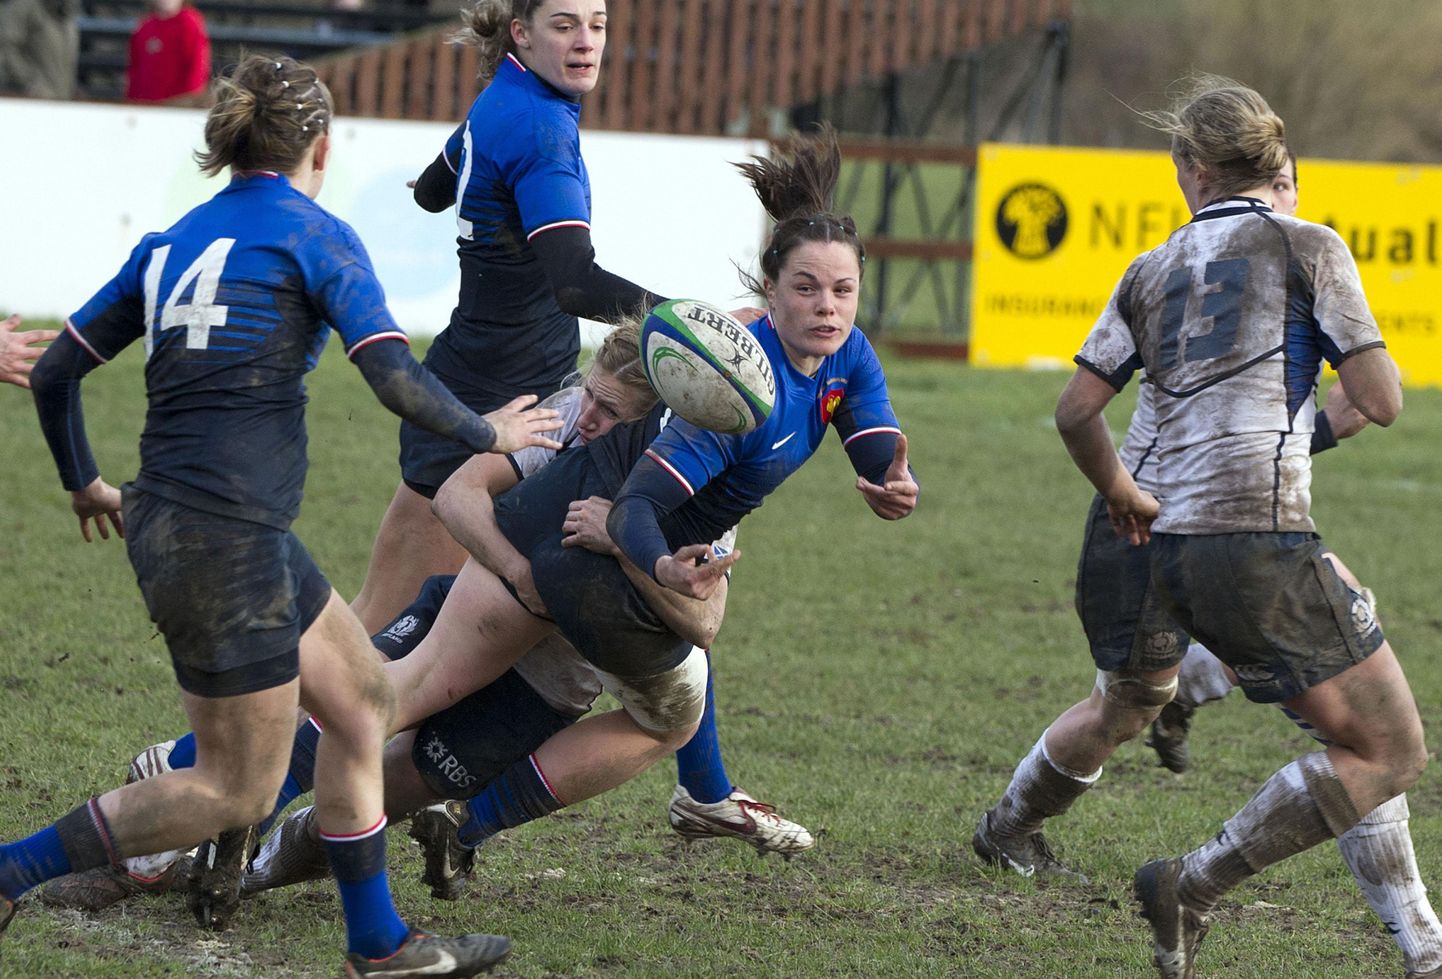 Naised rugbyt mängimas.